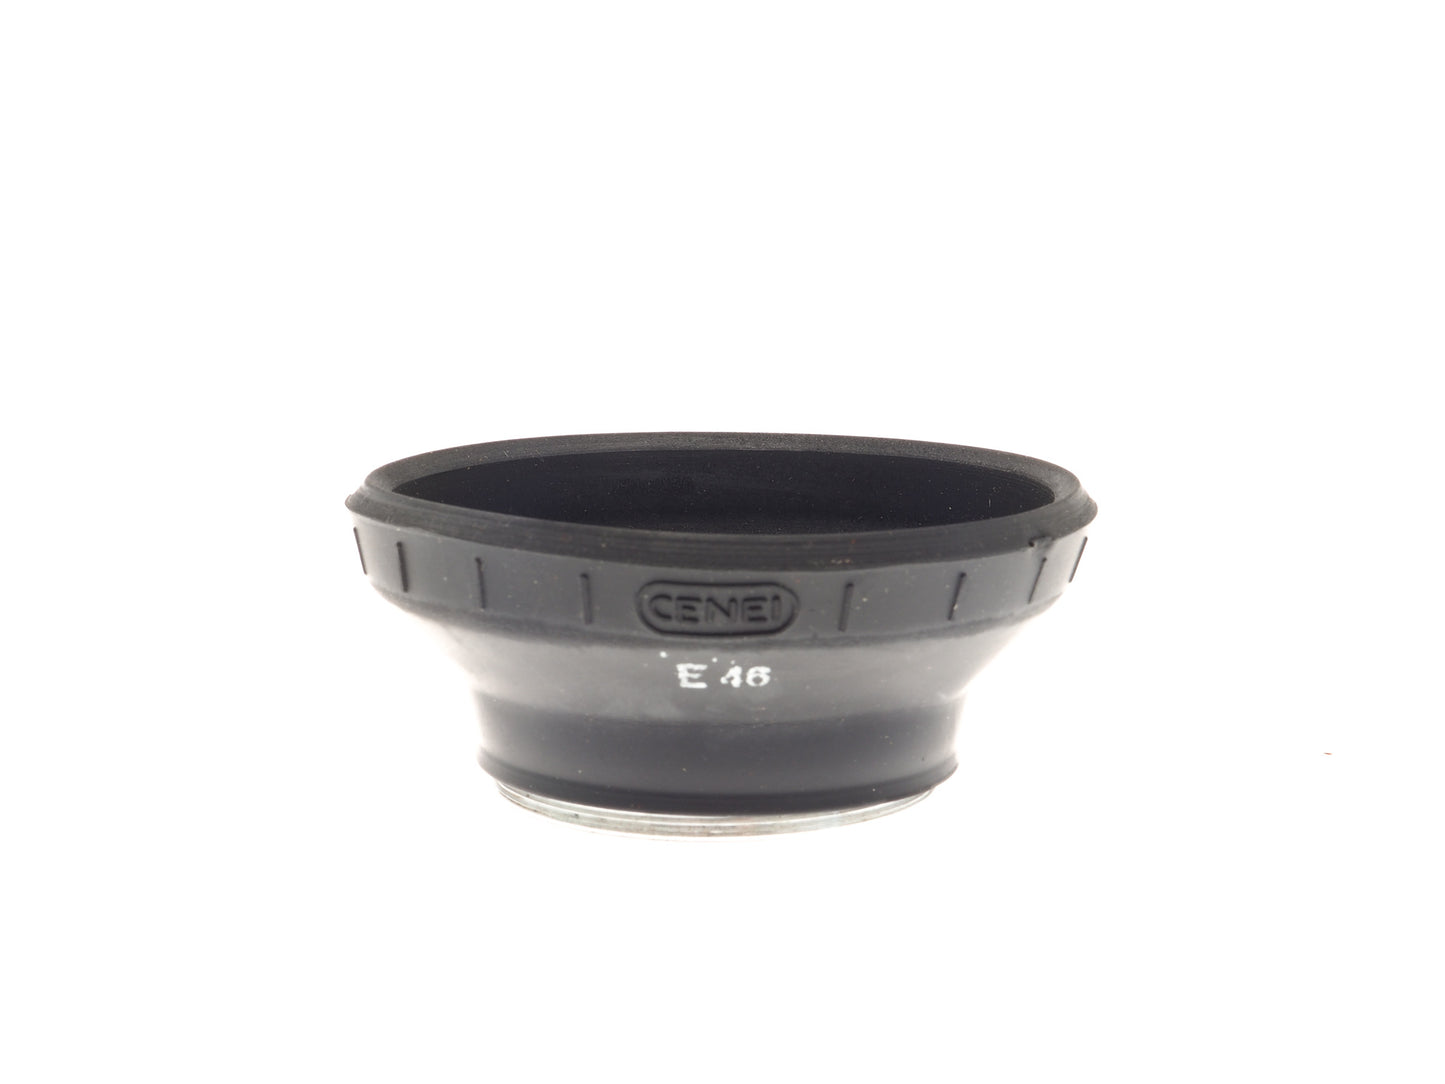 Cenei E46 Rubber Lens Hood